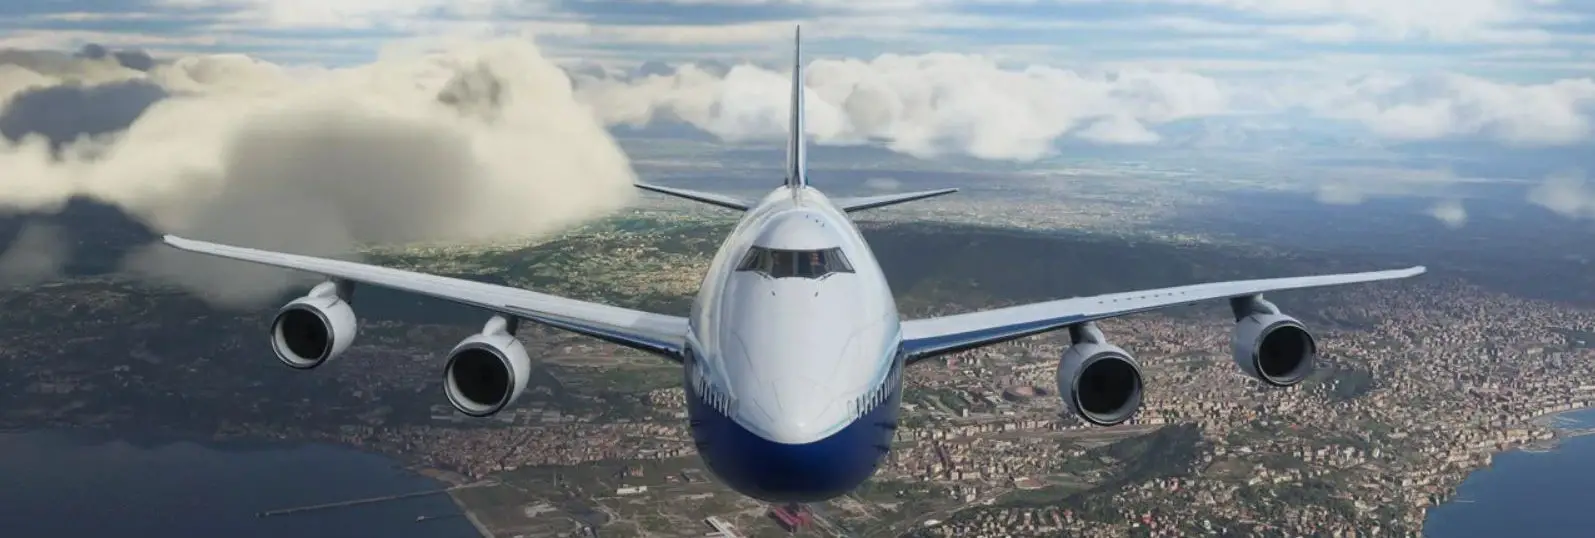 flight simulator 2020 in cloud